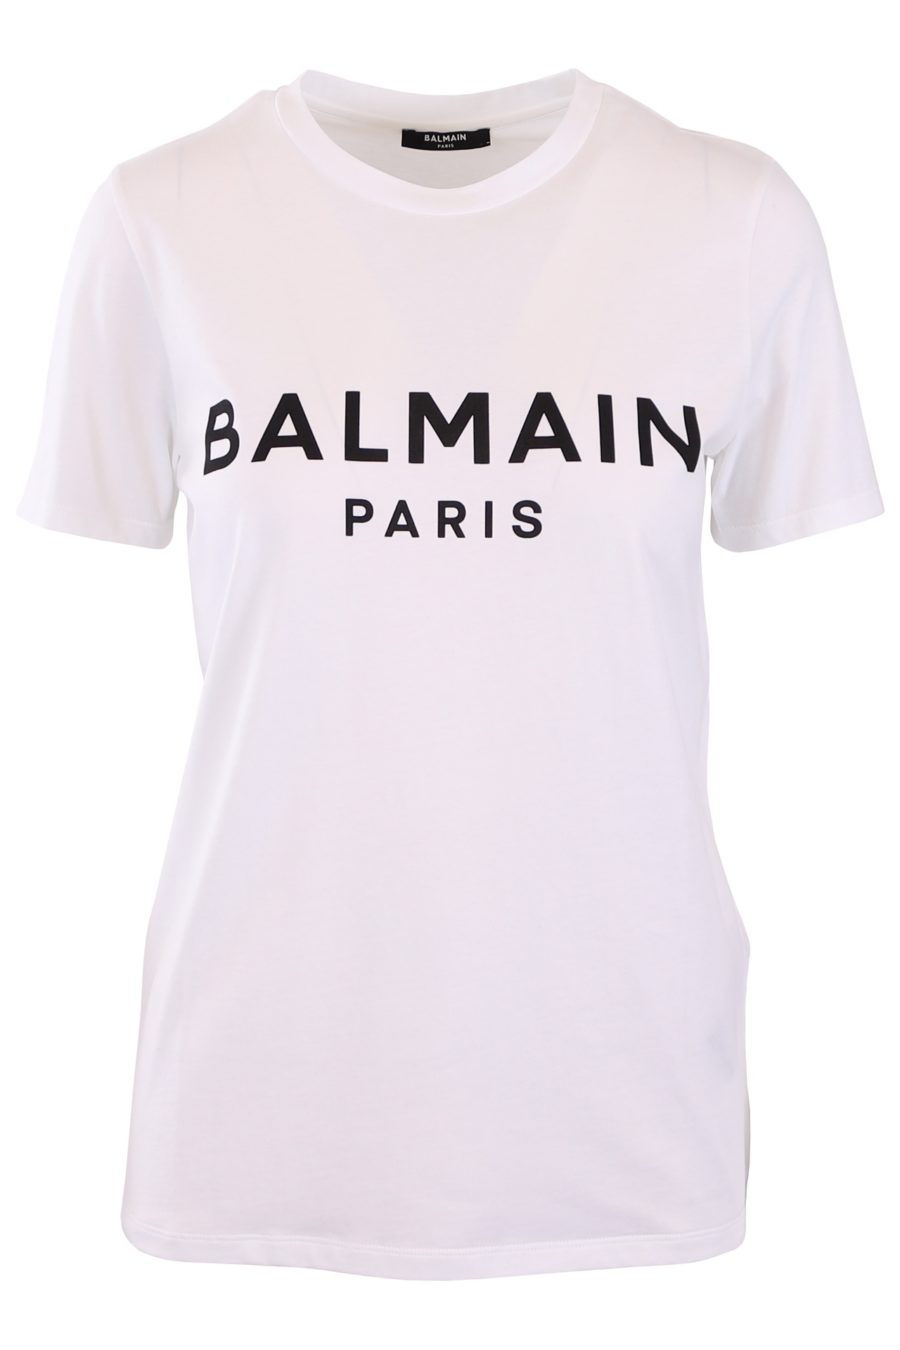 Balmain T-shirt white with black logo - 93efad166cc4ad1ac55b6782490799cc9546ce54